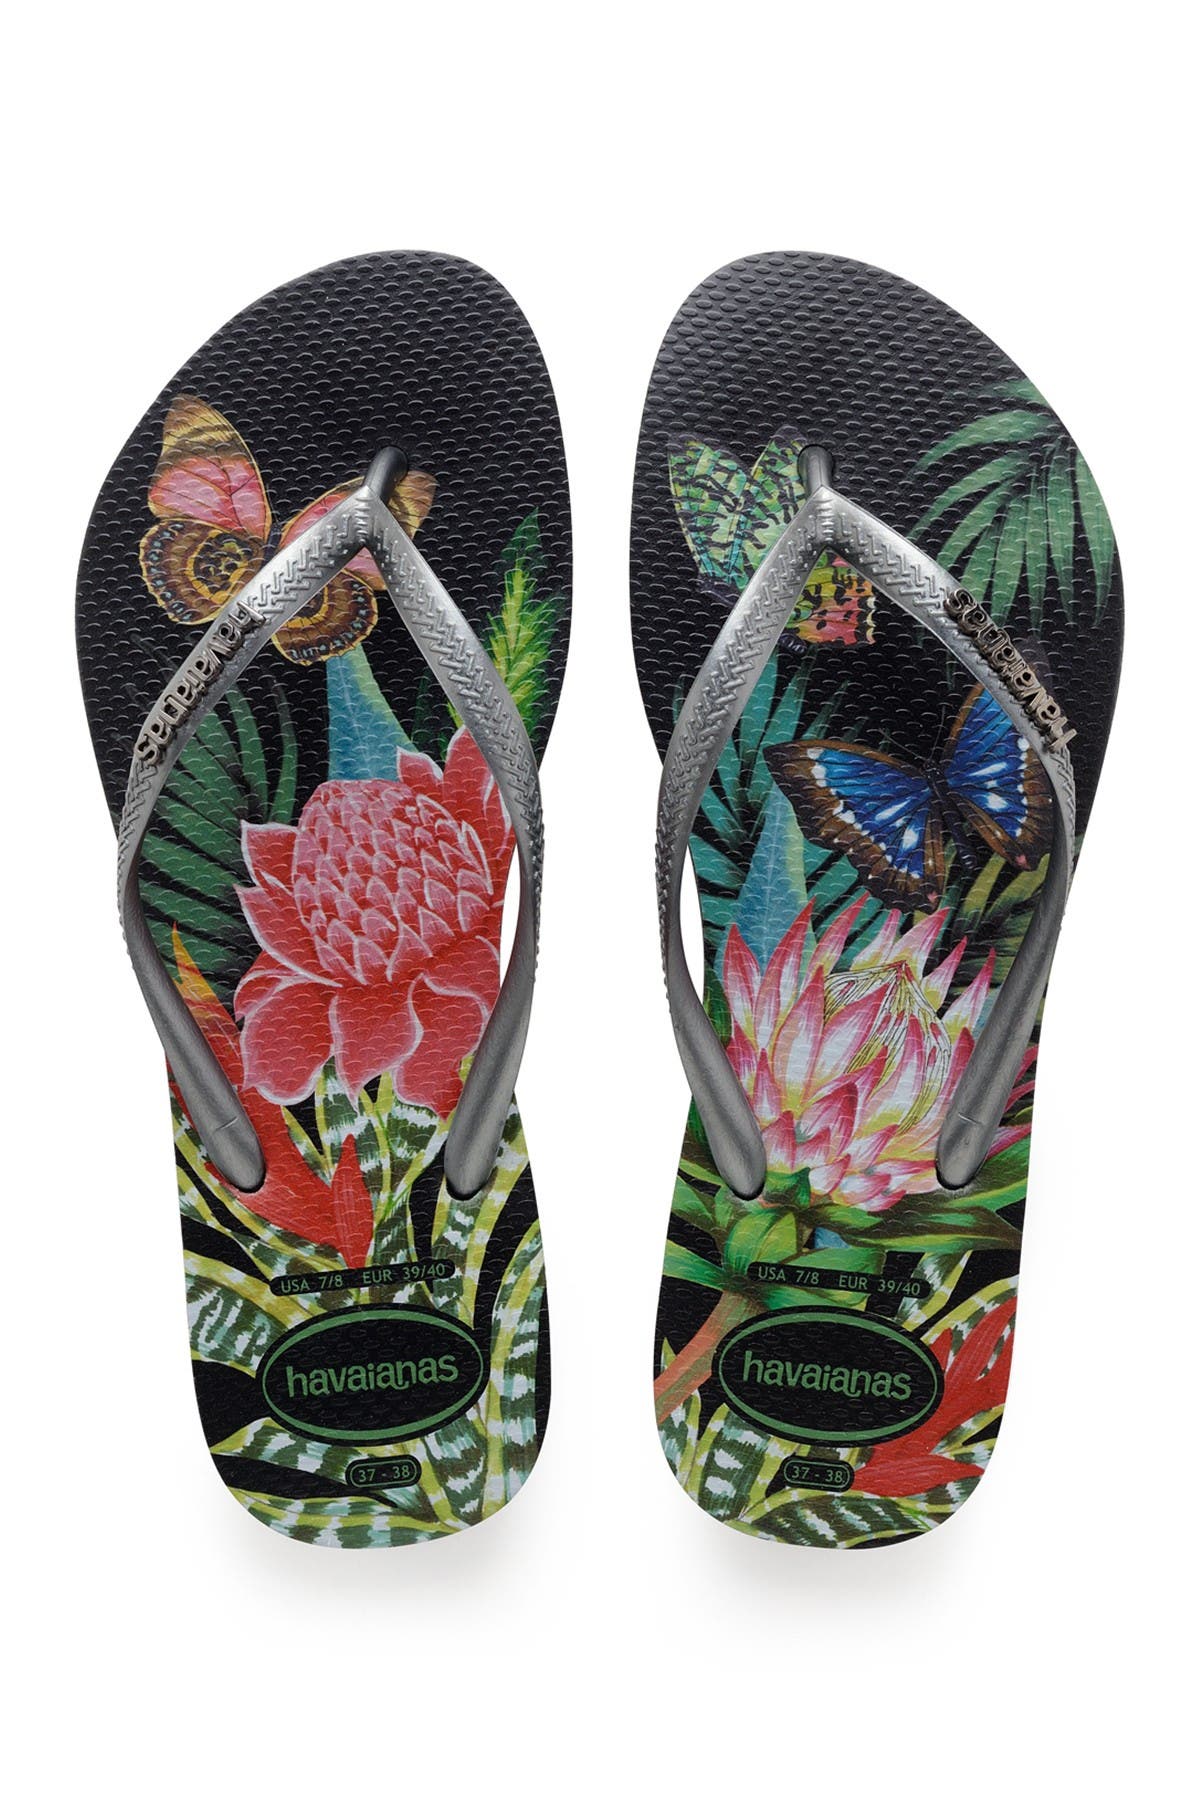 havaianas action sandals